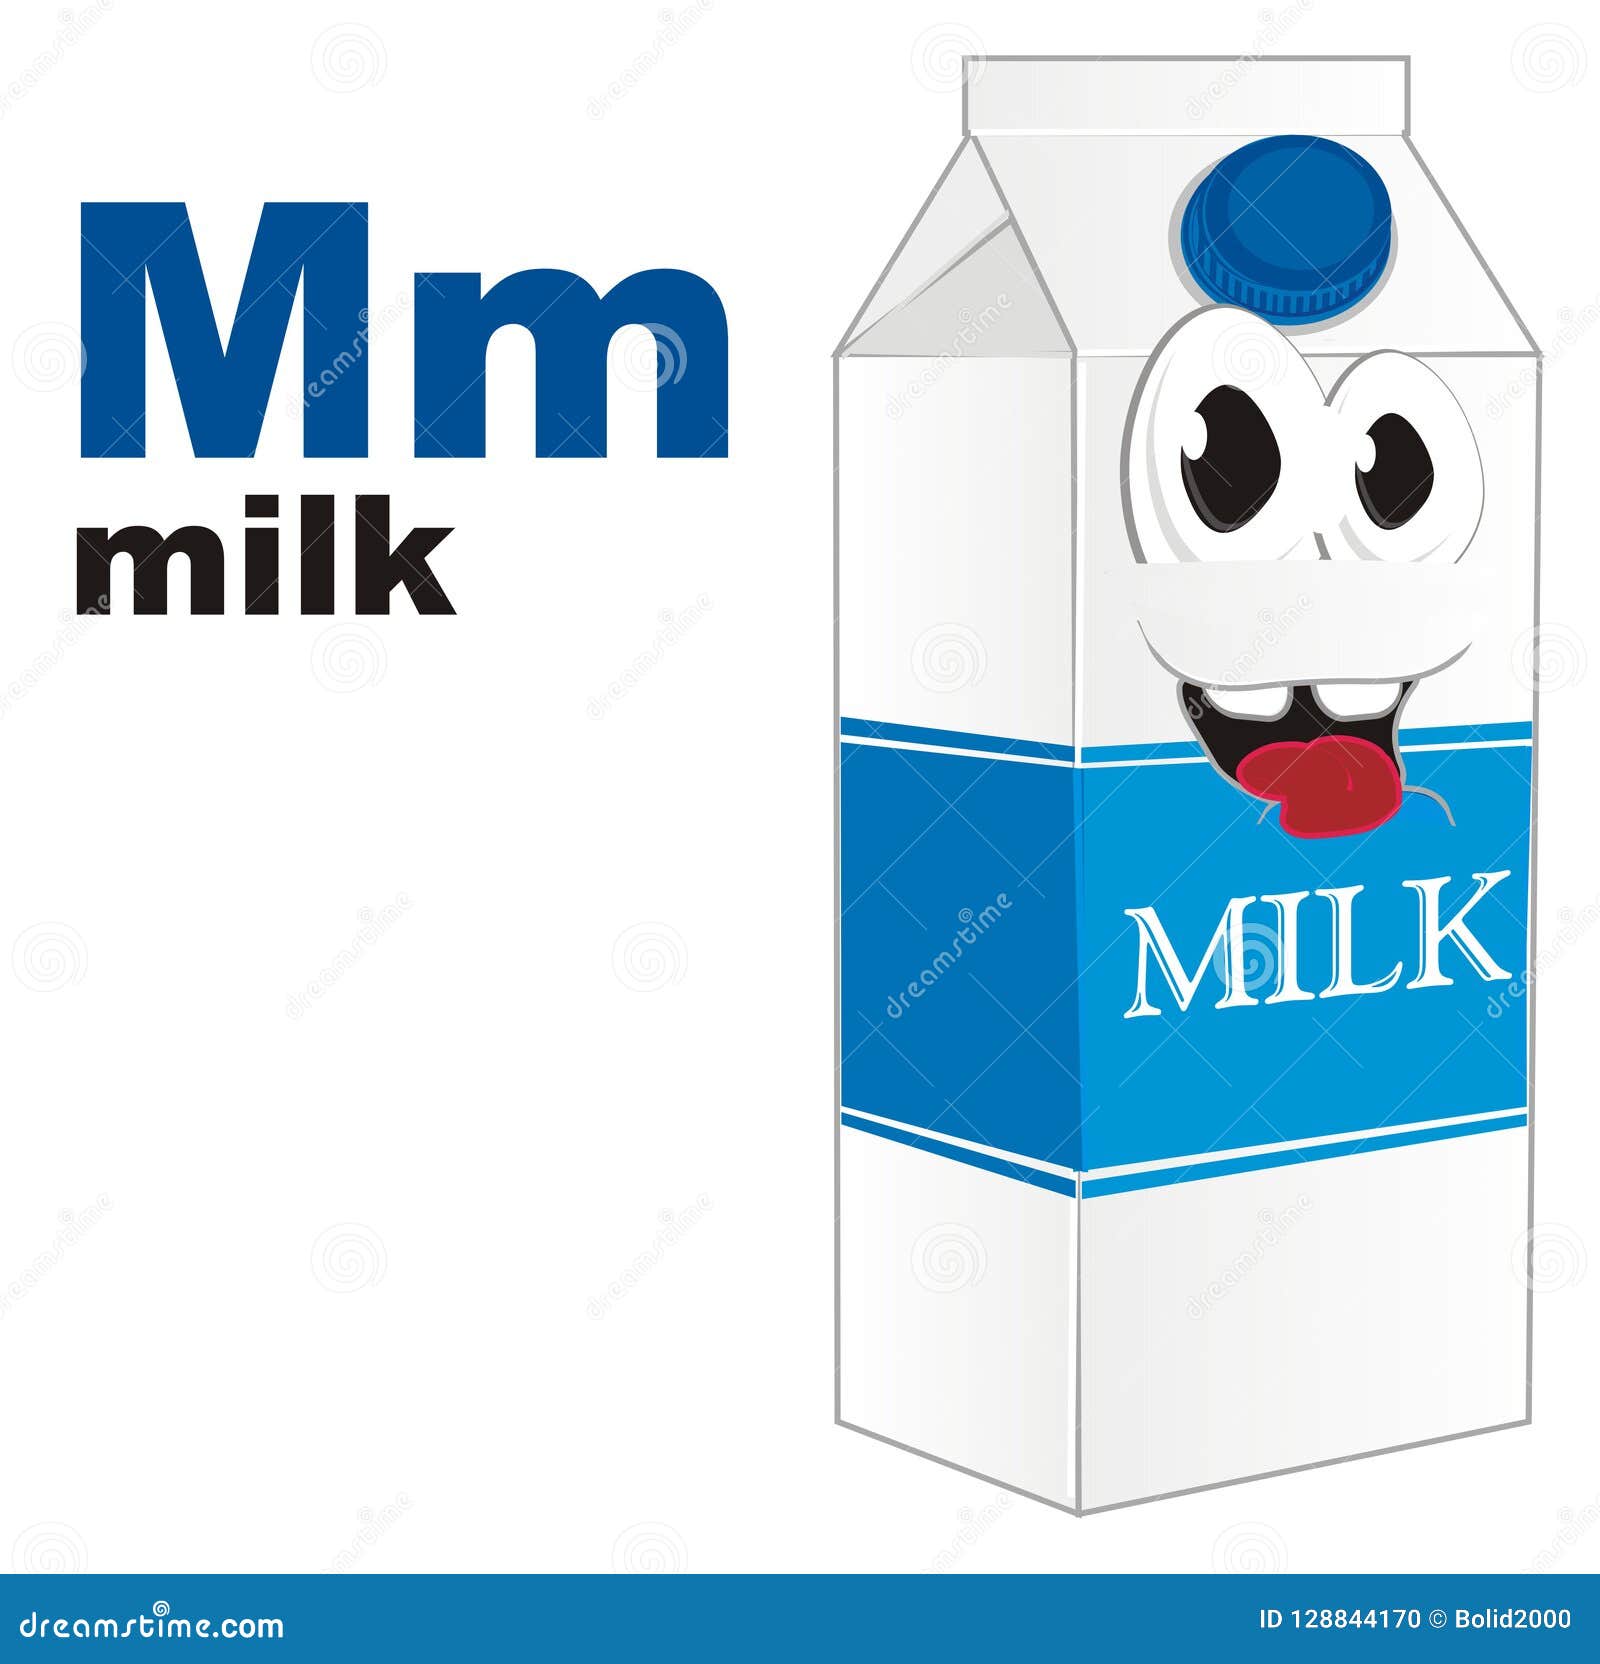 Funny carton milk and abc stock illustration. Illustration of lactose -  128844170